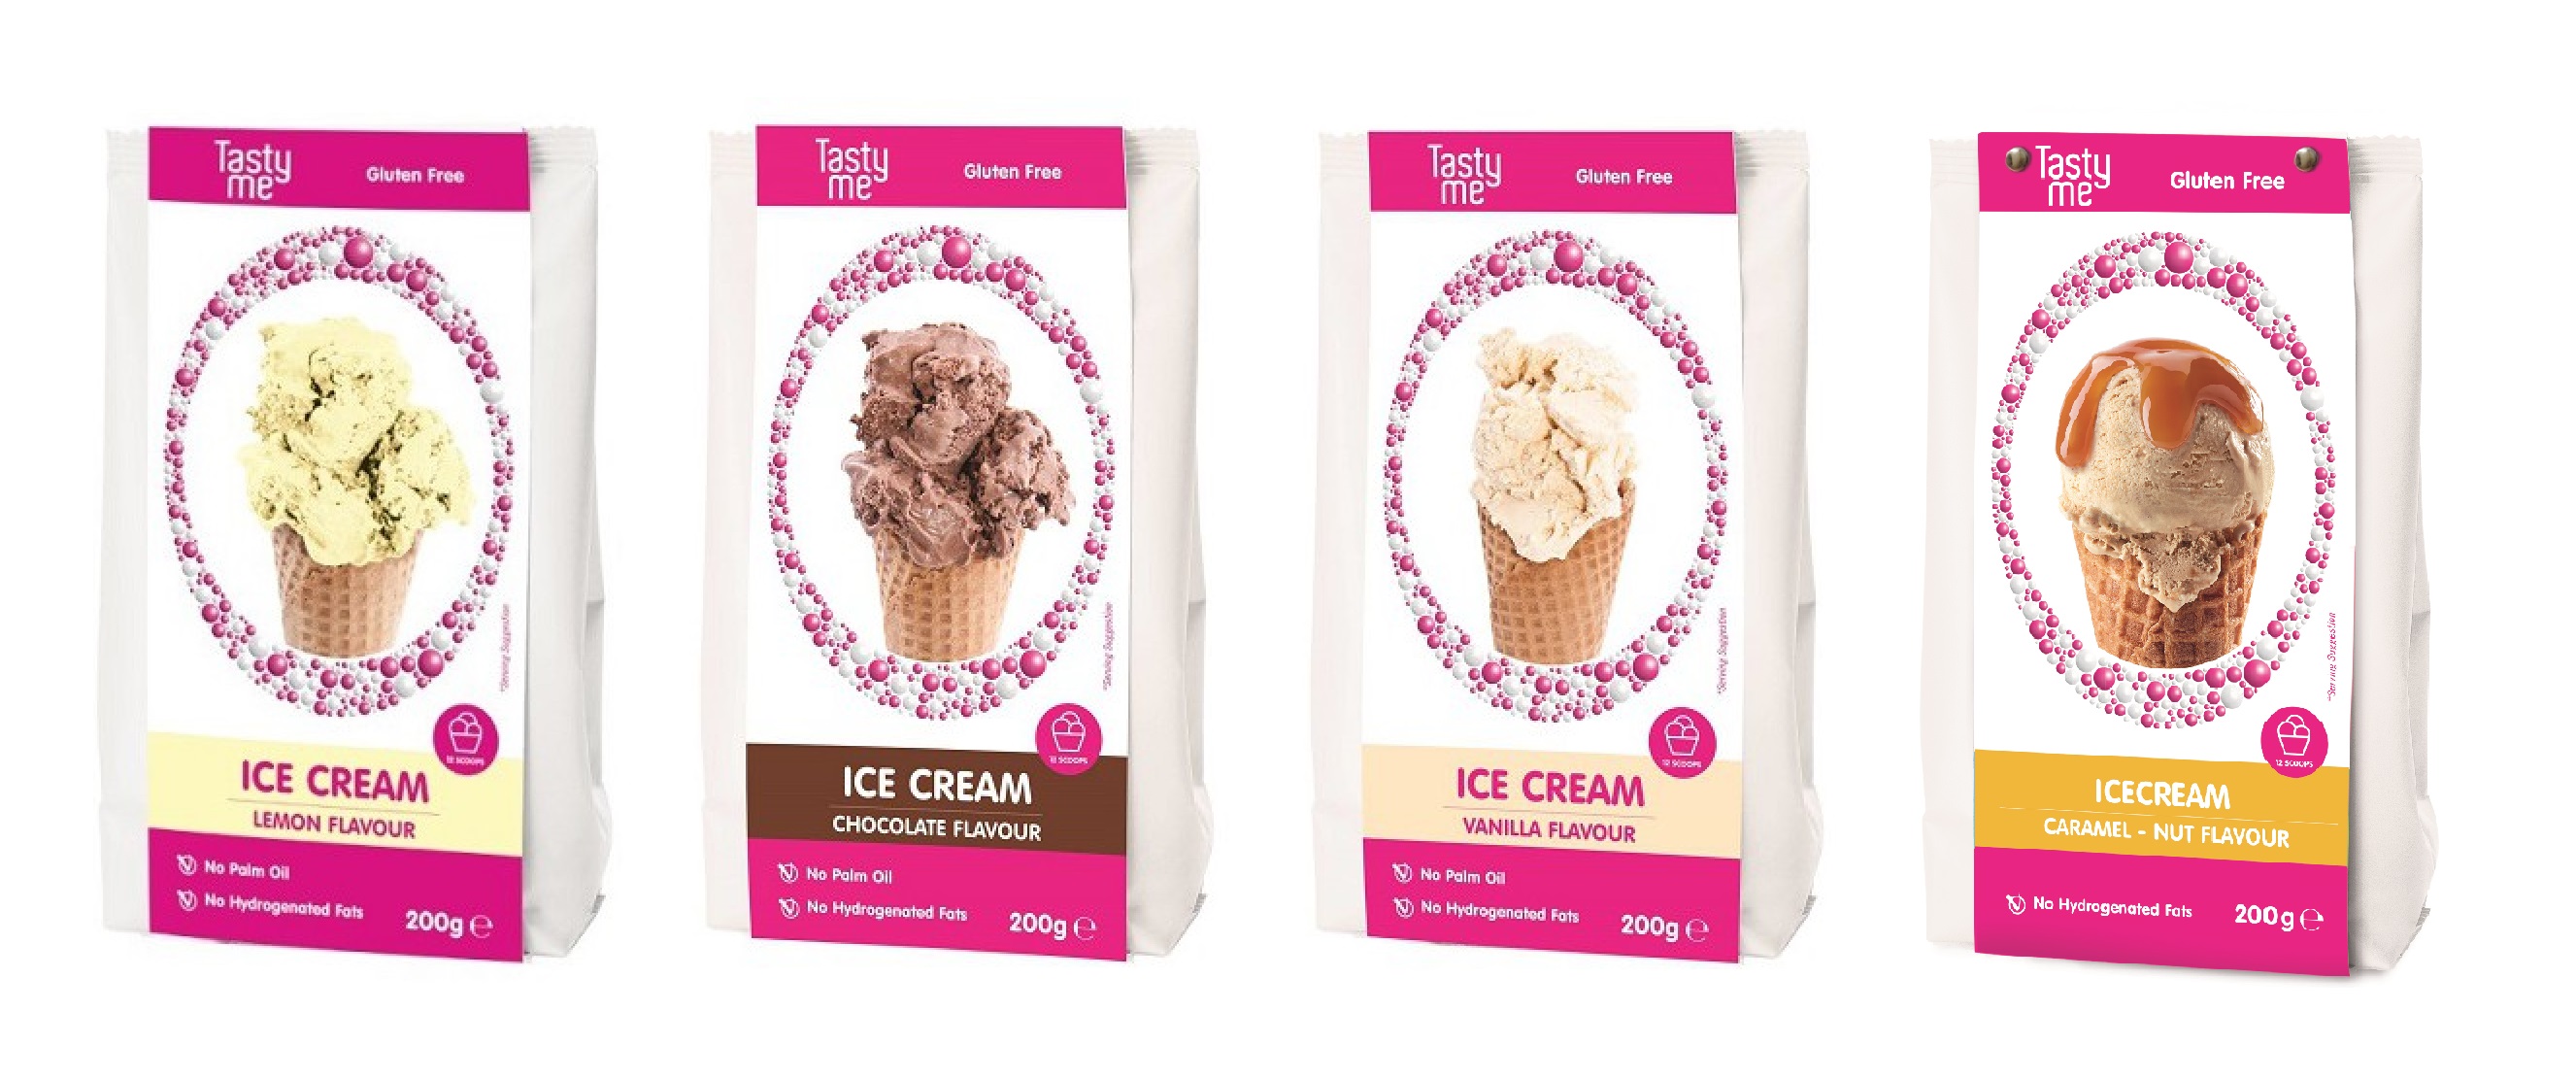 Value pack 2 of 4 ice cream mixes - gluten-free